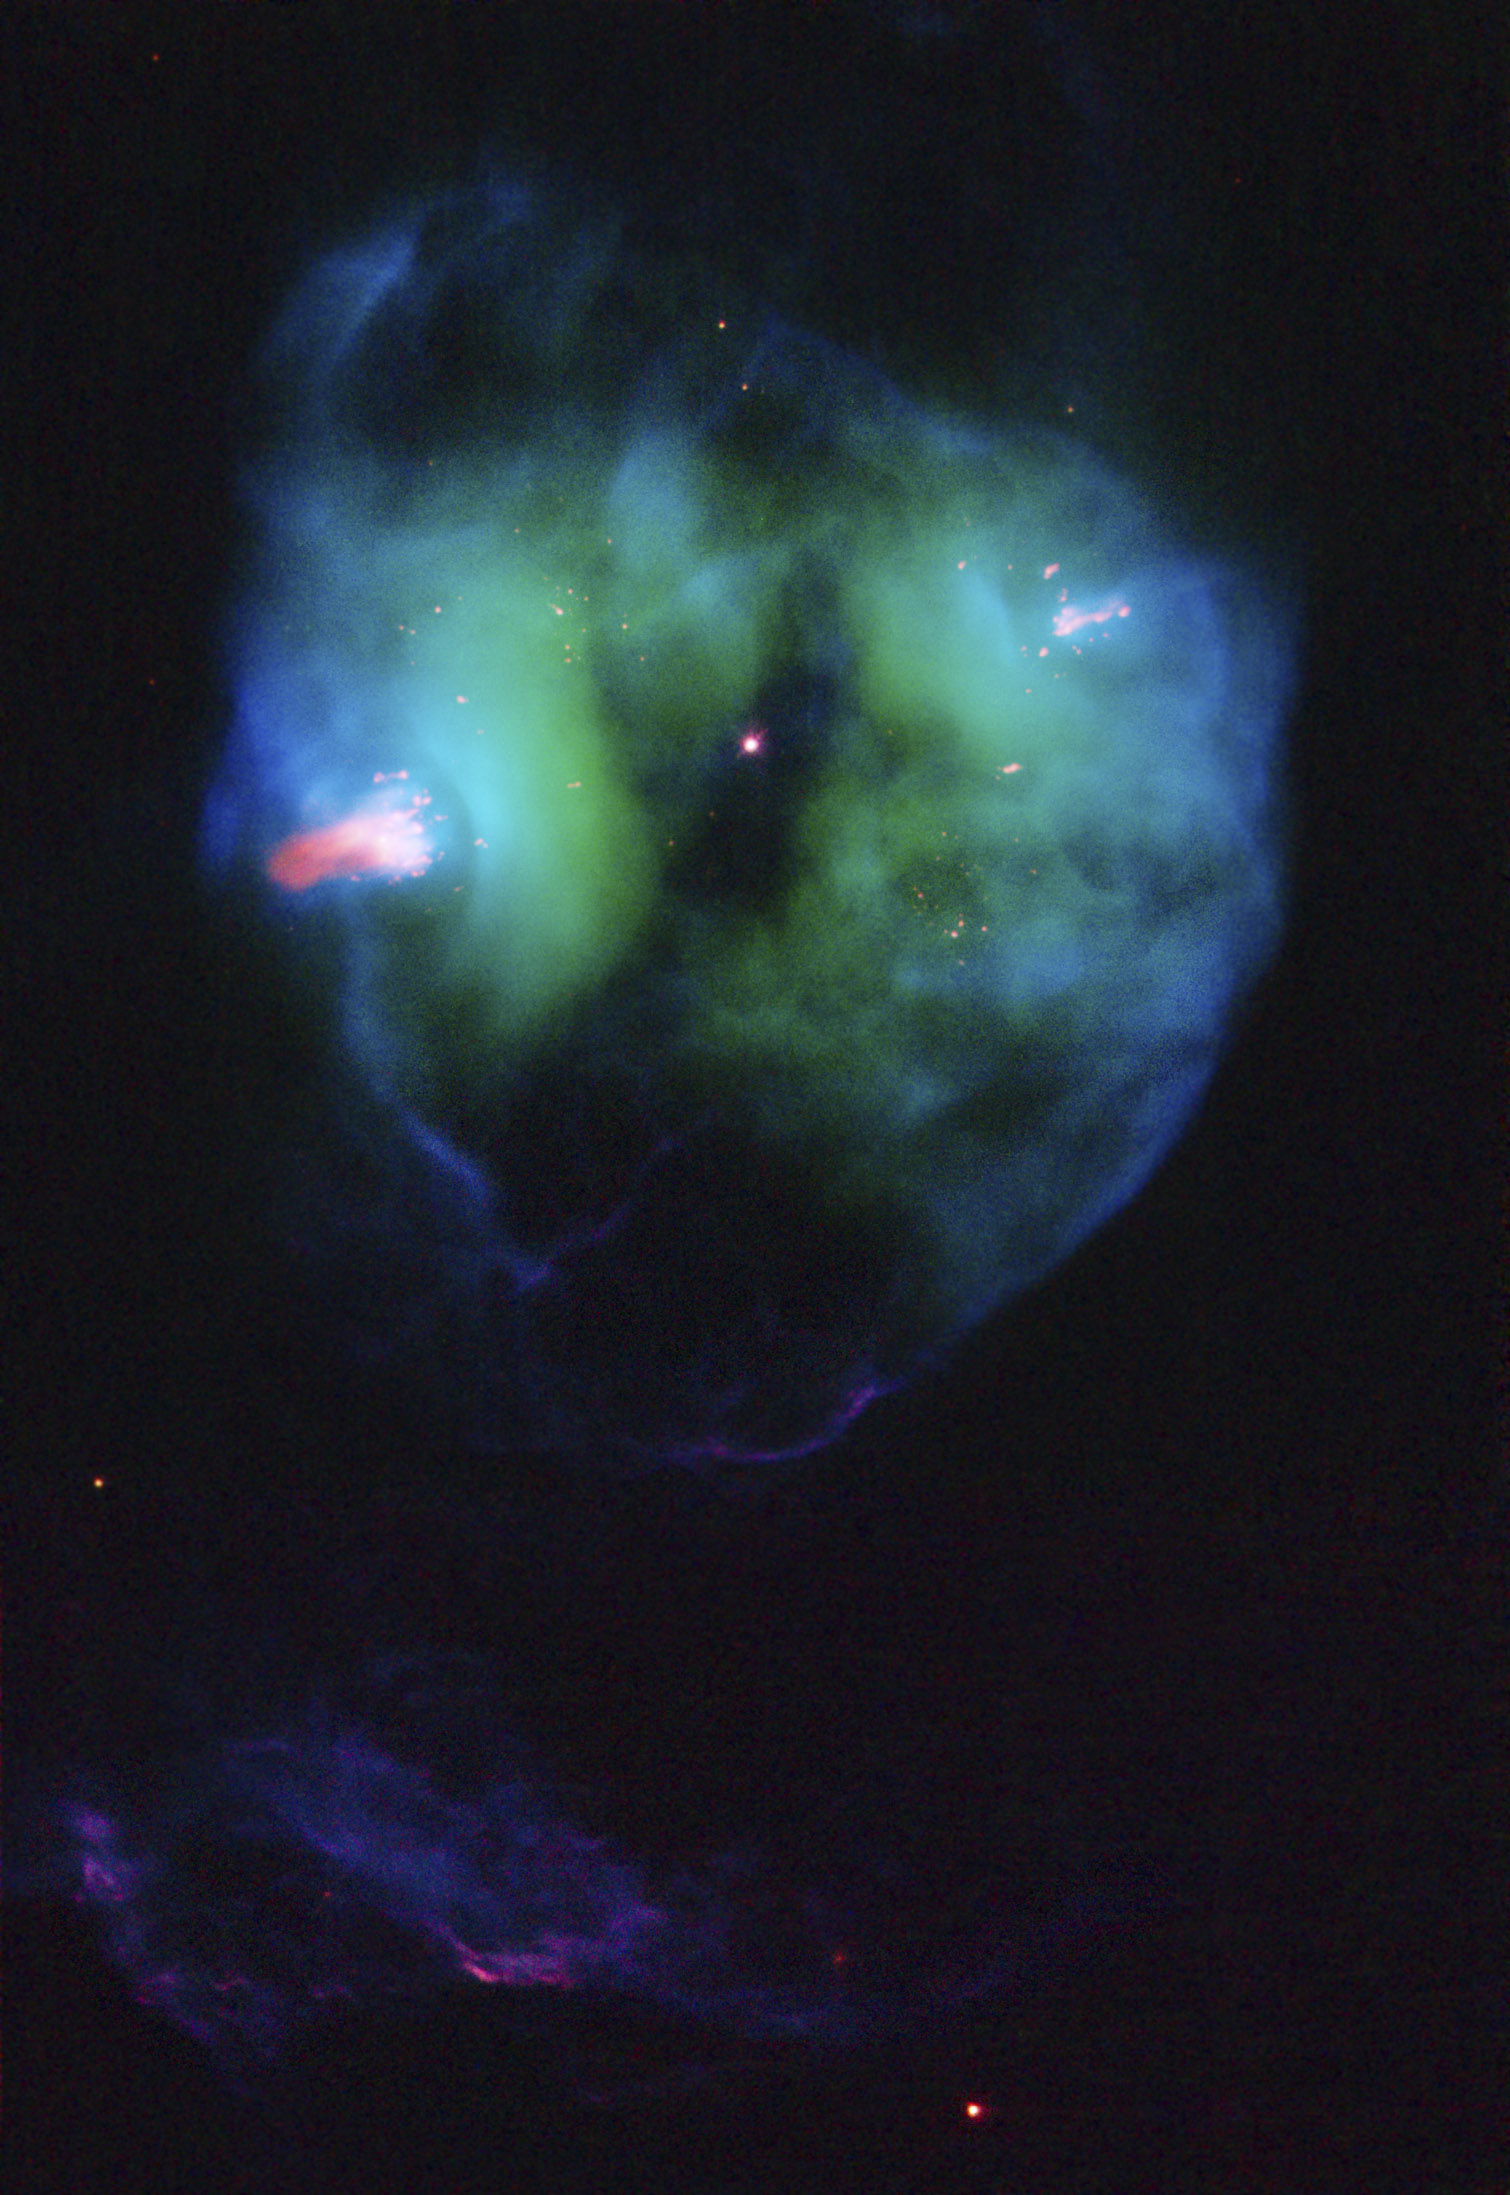 planetary nebula nasa